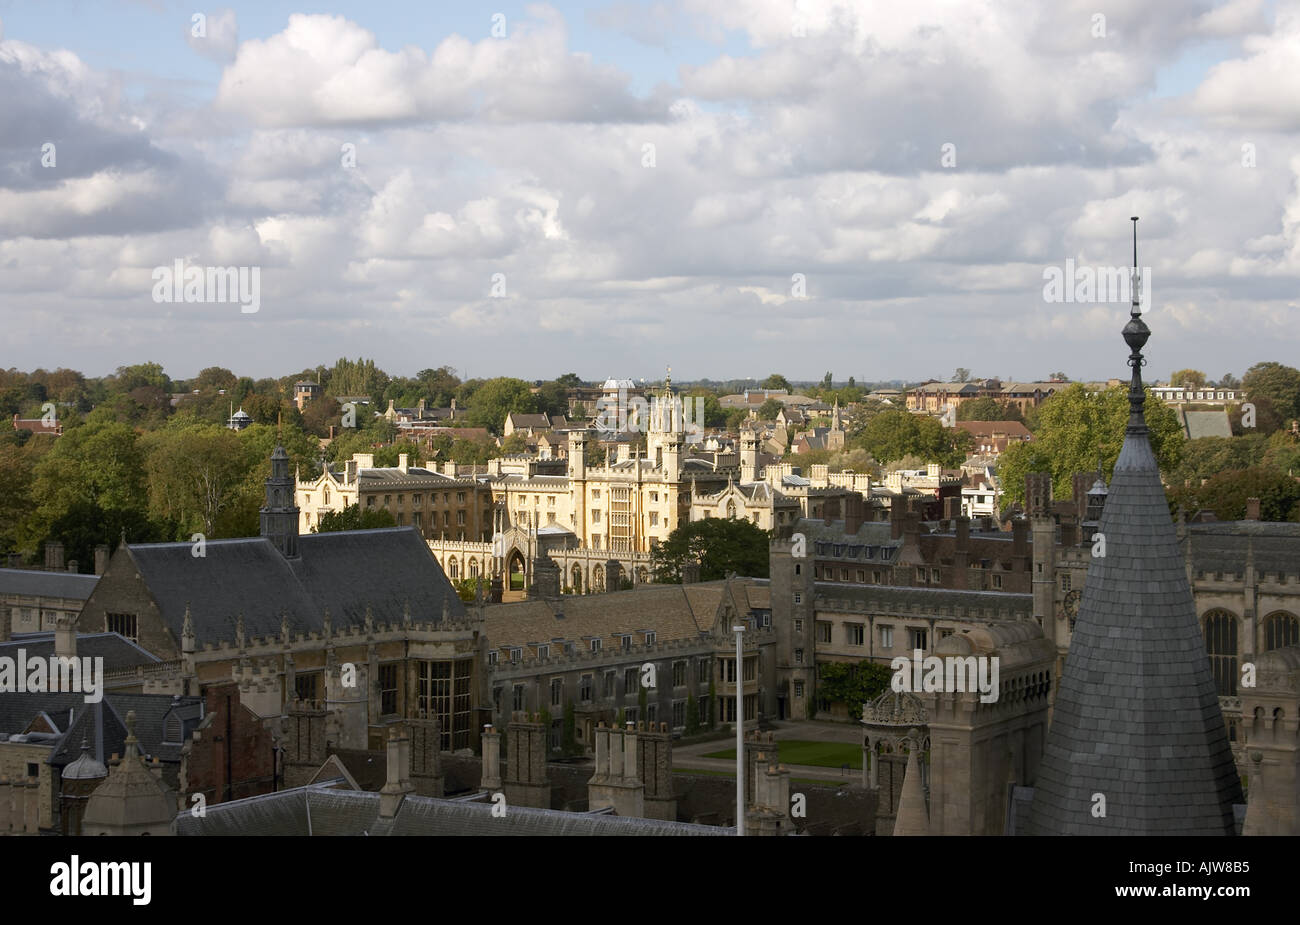 View across rooftops to St John s College Cambridge England 2004 Stock Photo